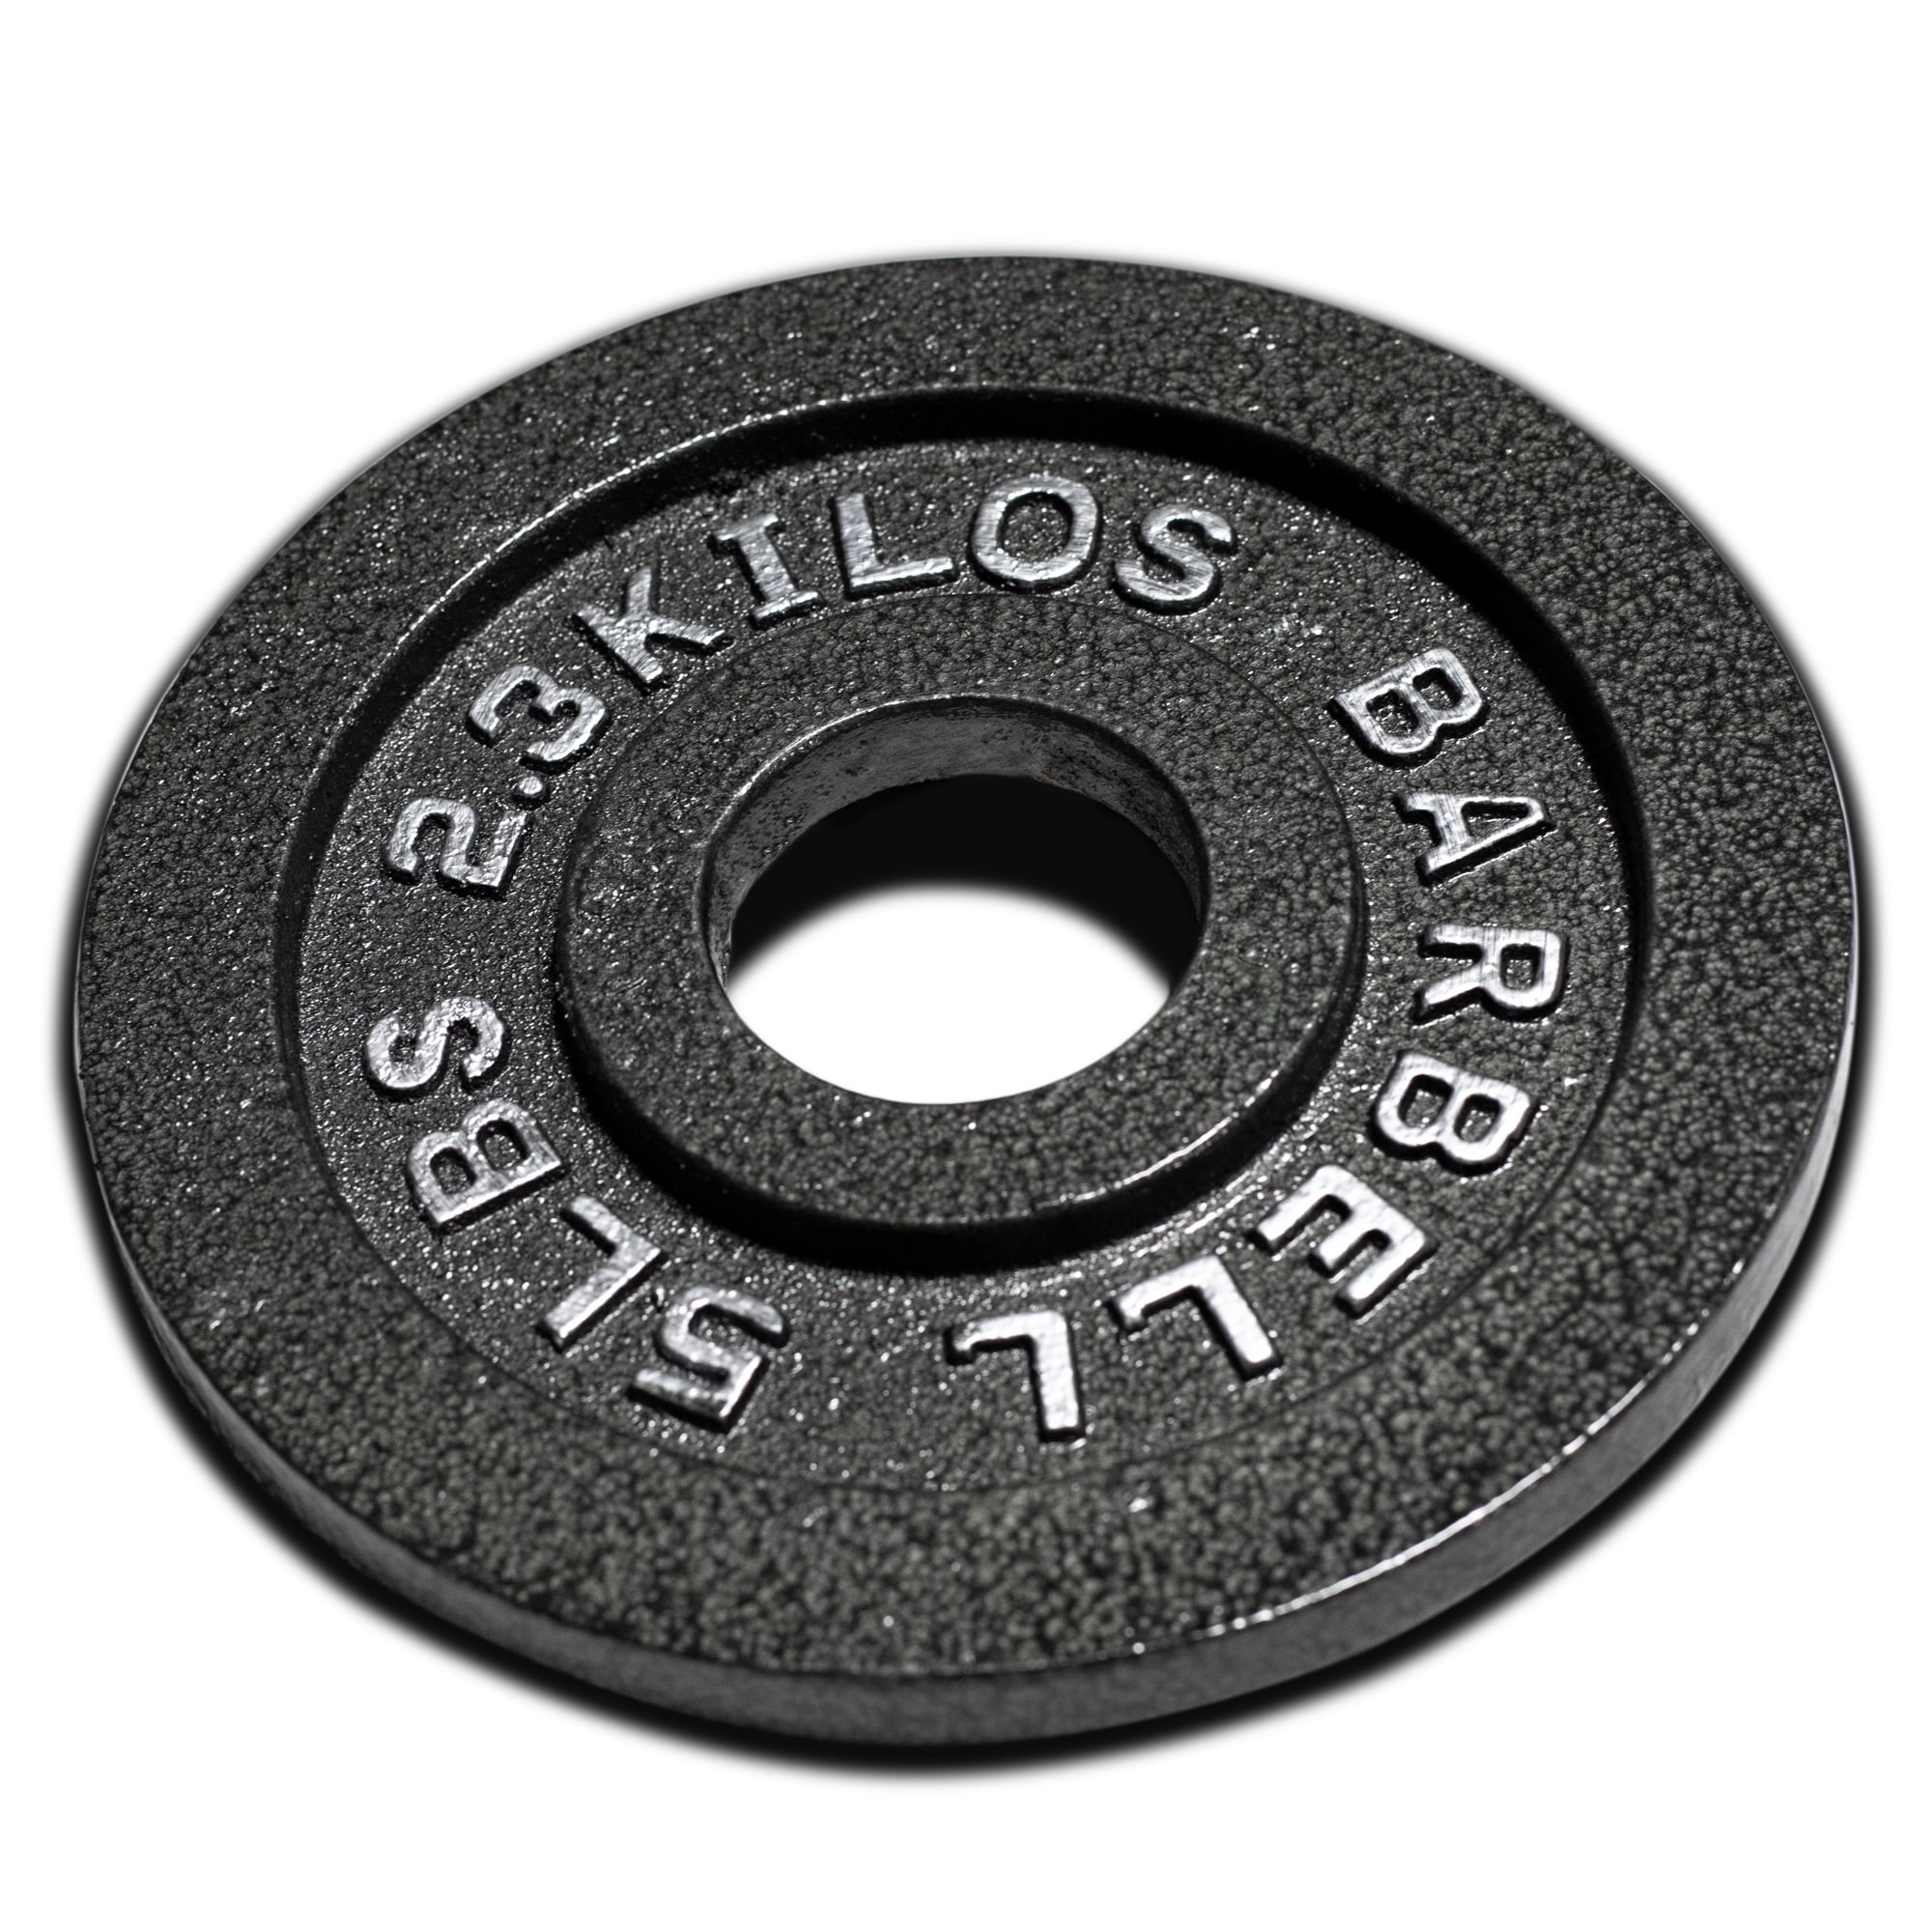 20 Lb Total CAP 5 LB Barbell Weight Plates 1’’ Standard Grip Weights Set of 4 